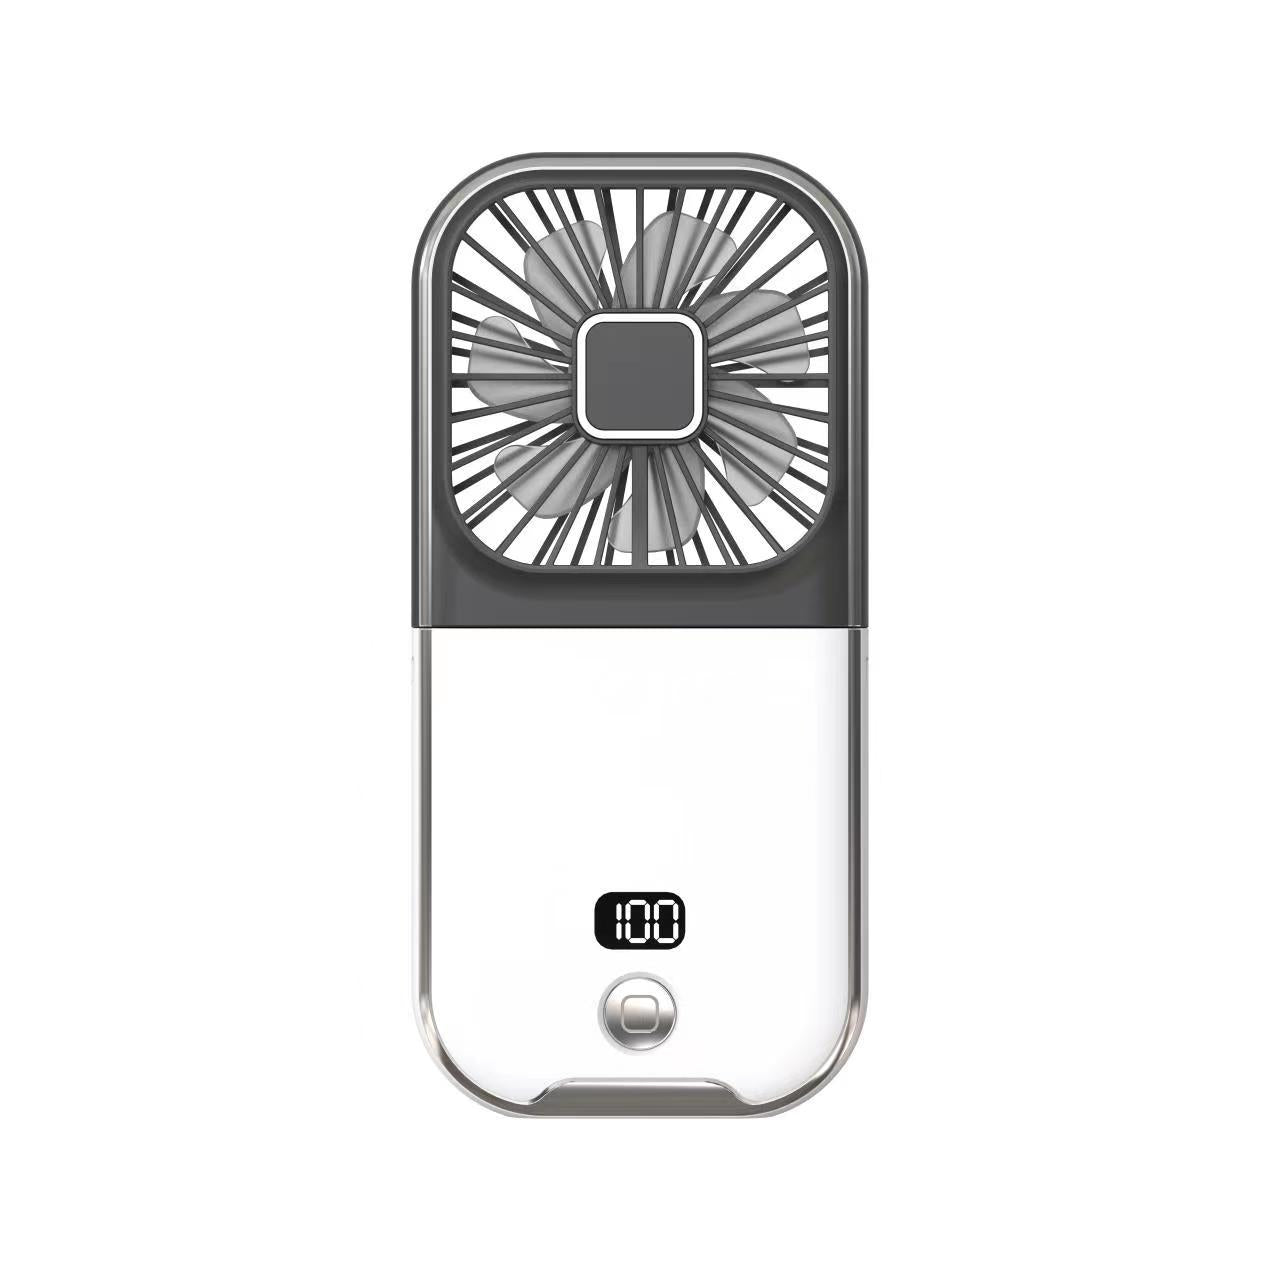 3 in 1 Folding Portable Neck Fan Digital Display Mini Fan with Power Bank & Cellphone Stand